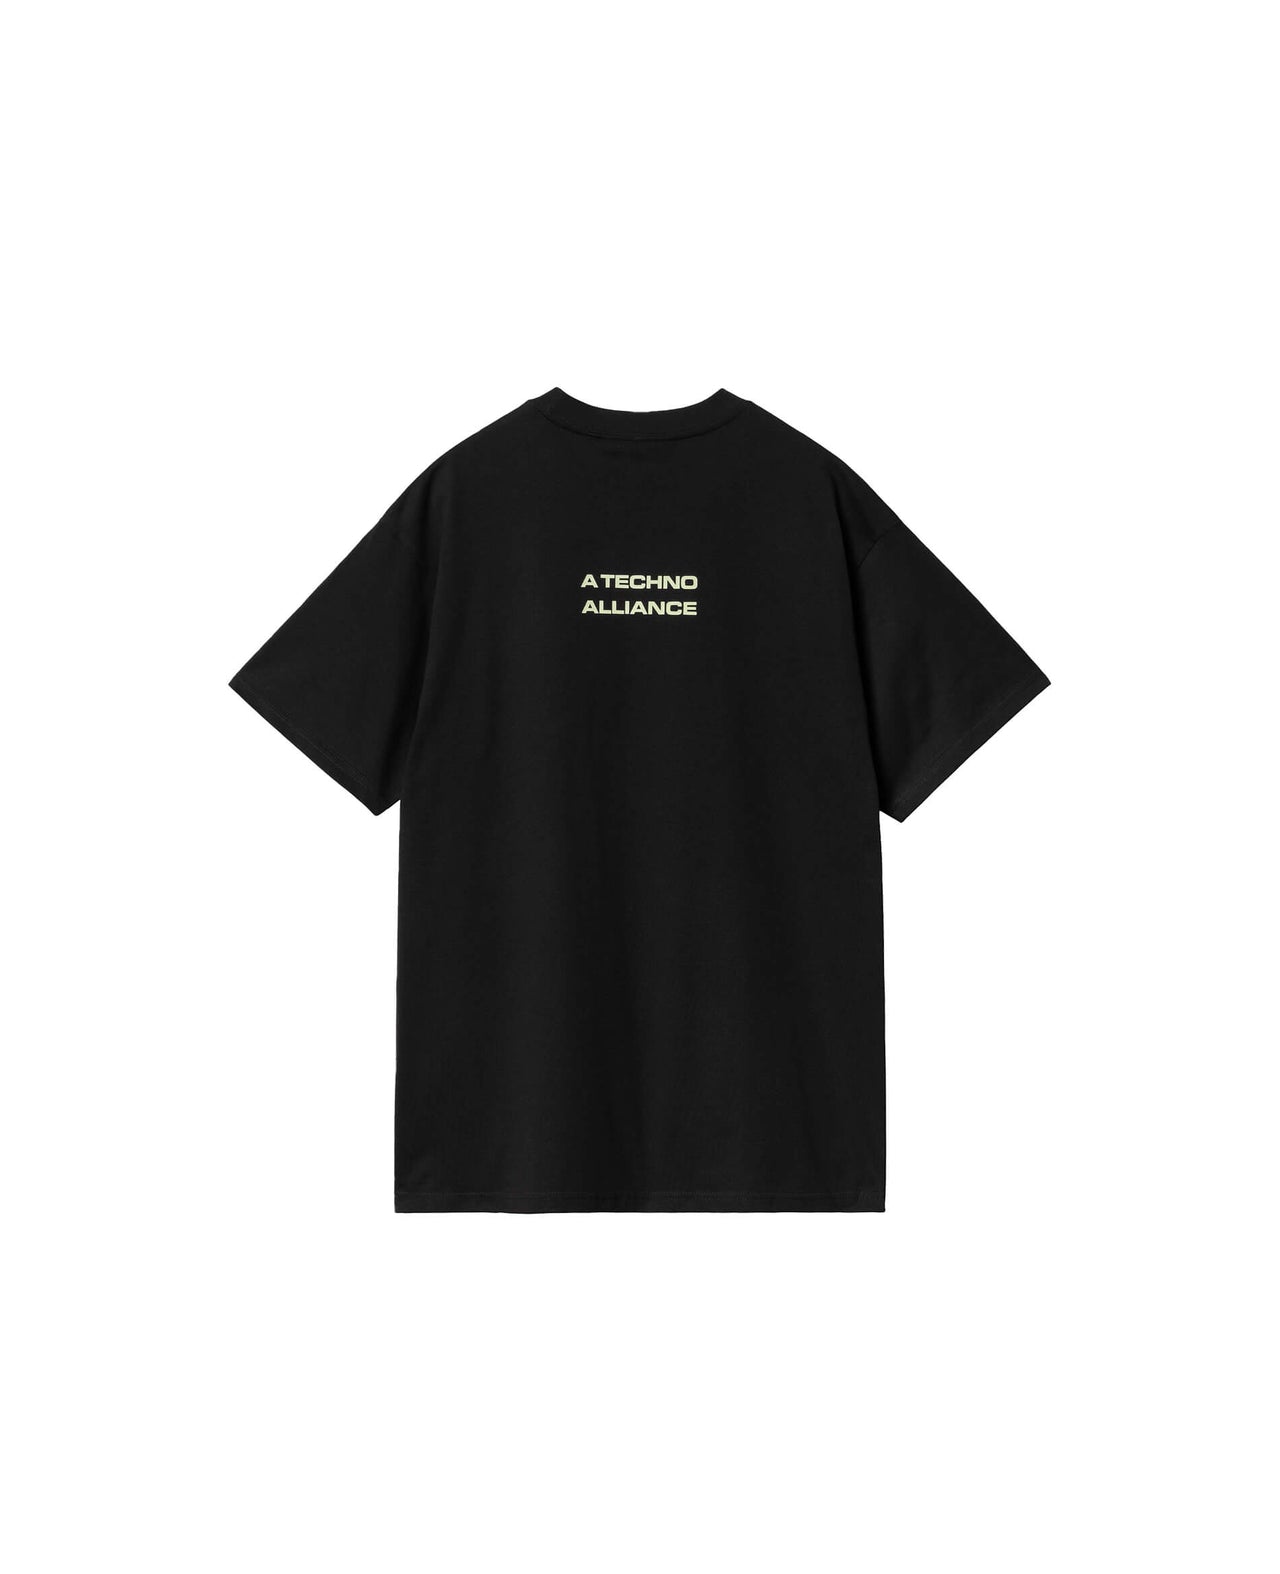 Carhartt WIP x TRESOR Techno Alliance S/S T-Shirt